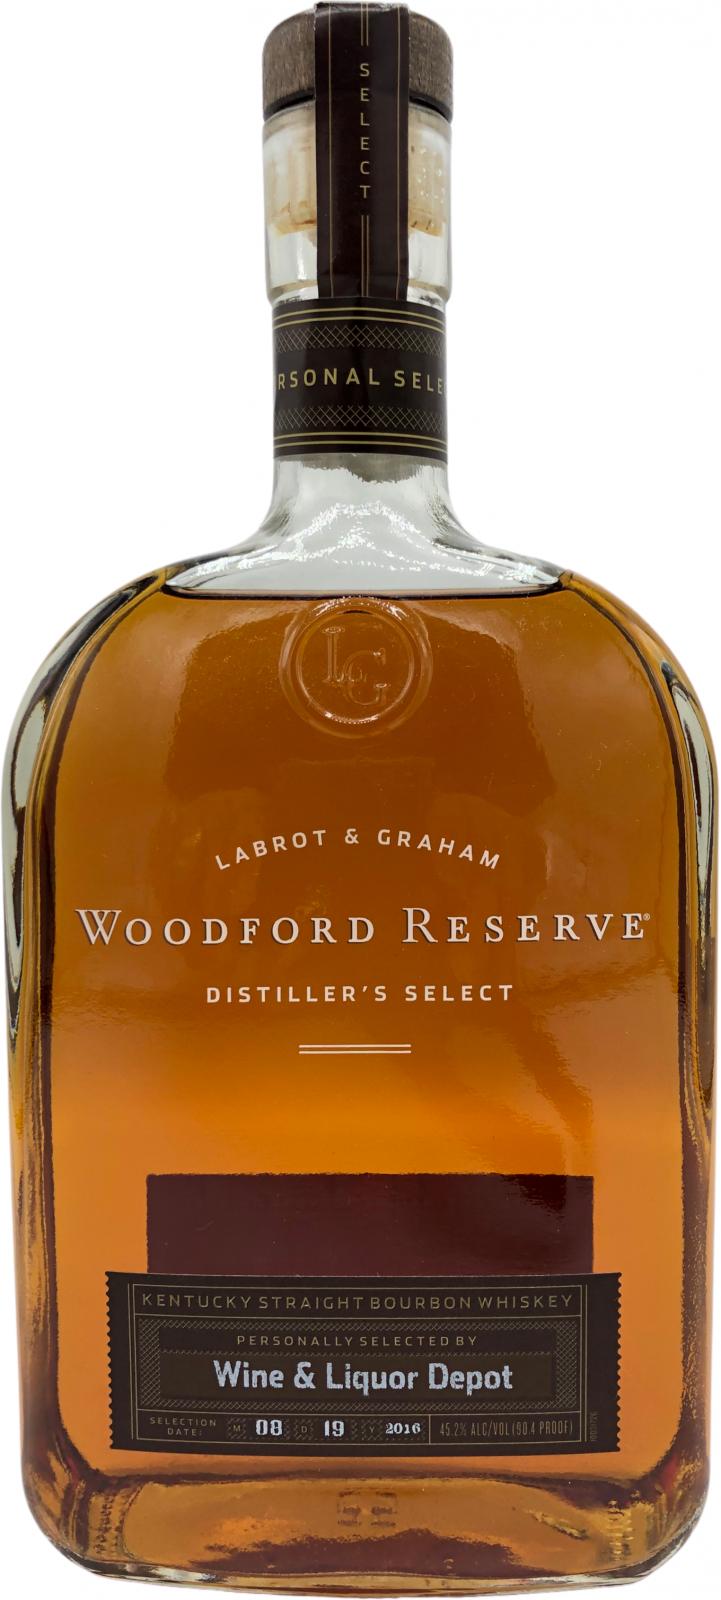 Woodford Reserve Distiller's Select Kentucky Straight Bourbon Whisky Wine & Liquor Depot 45.2% 1000ml